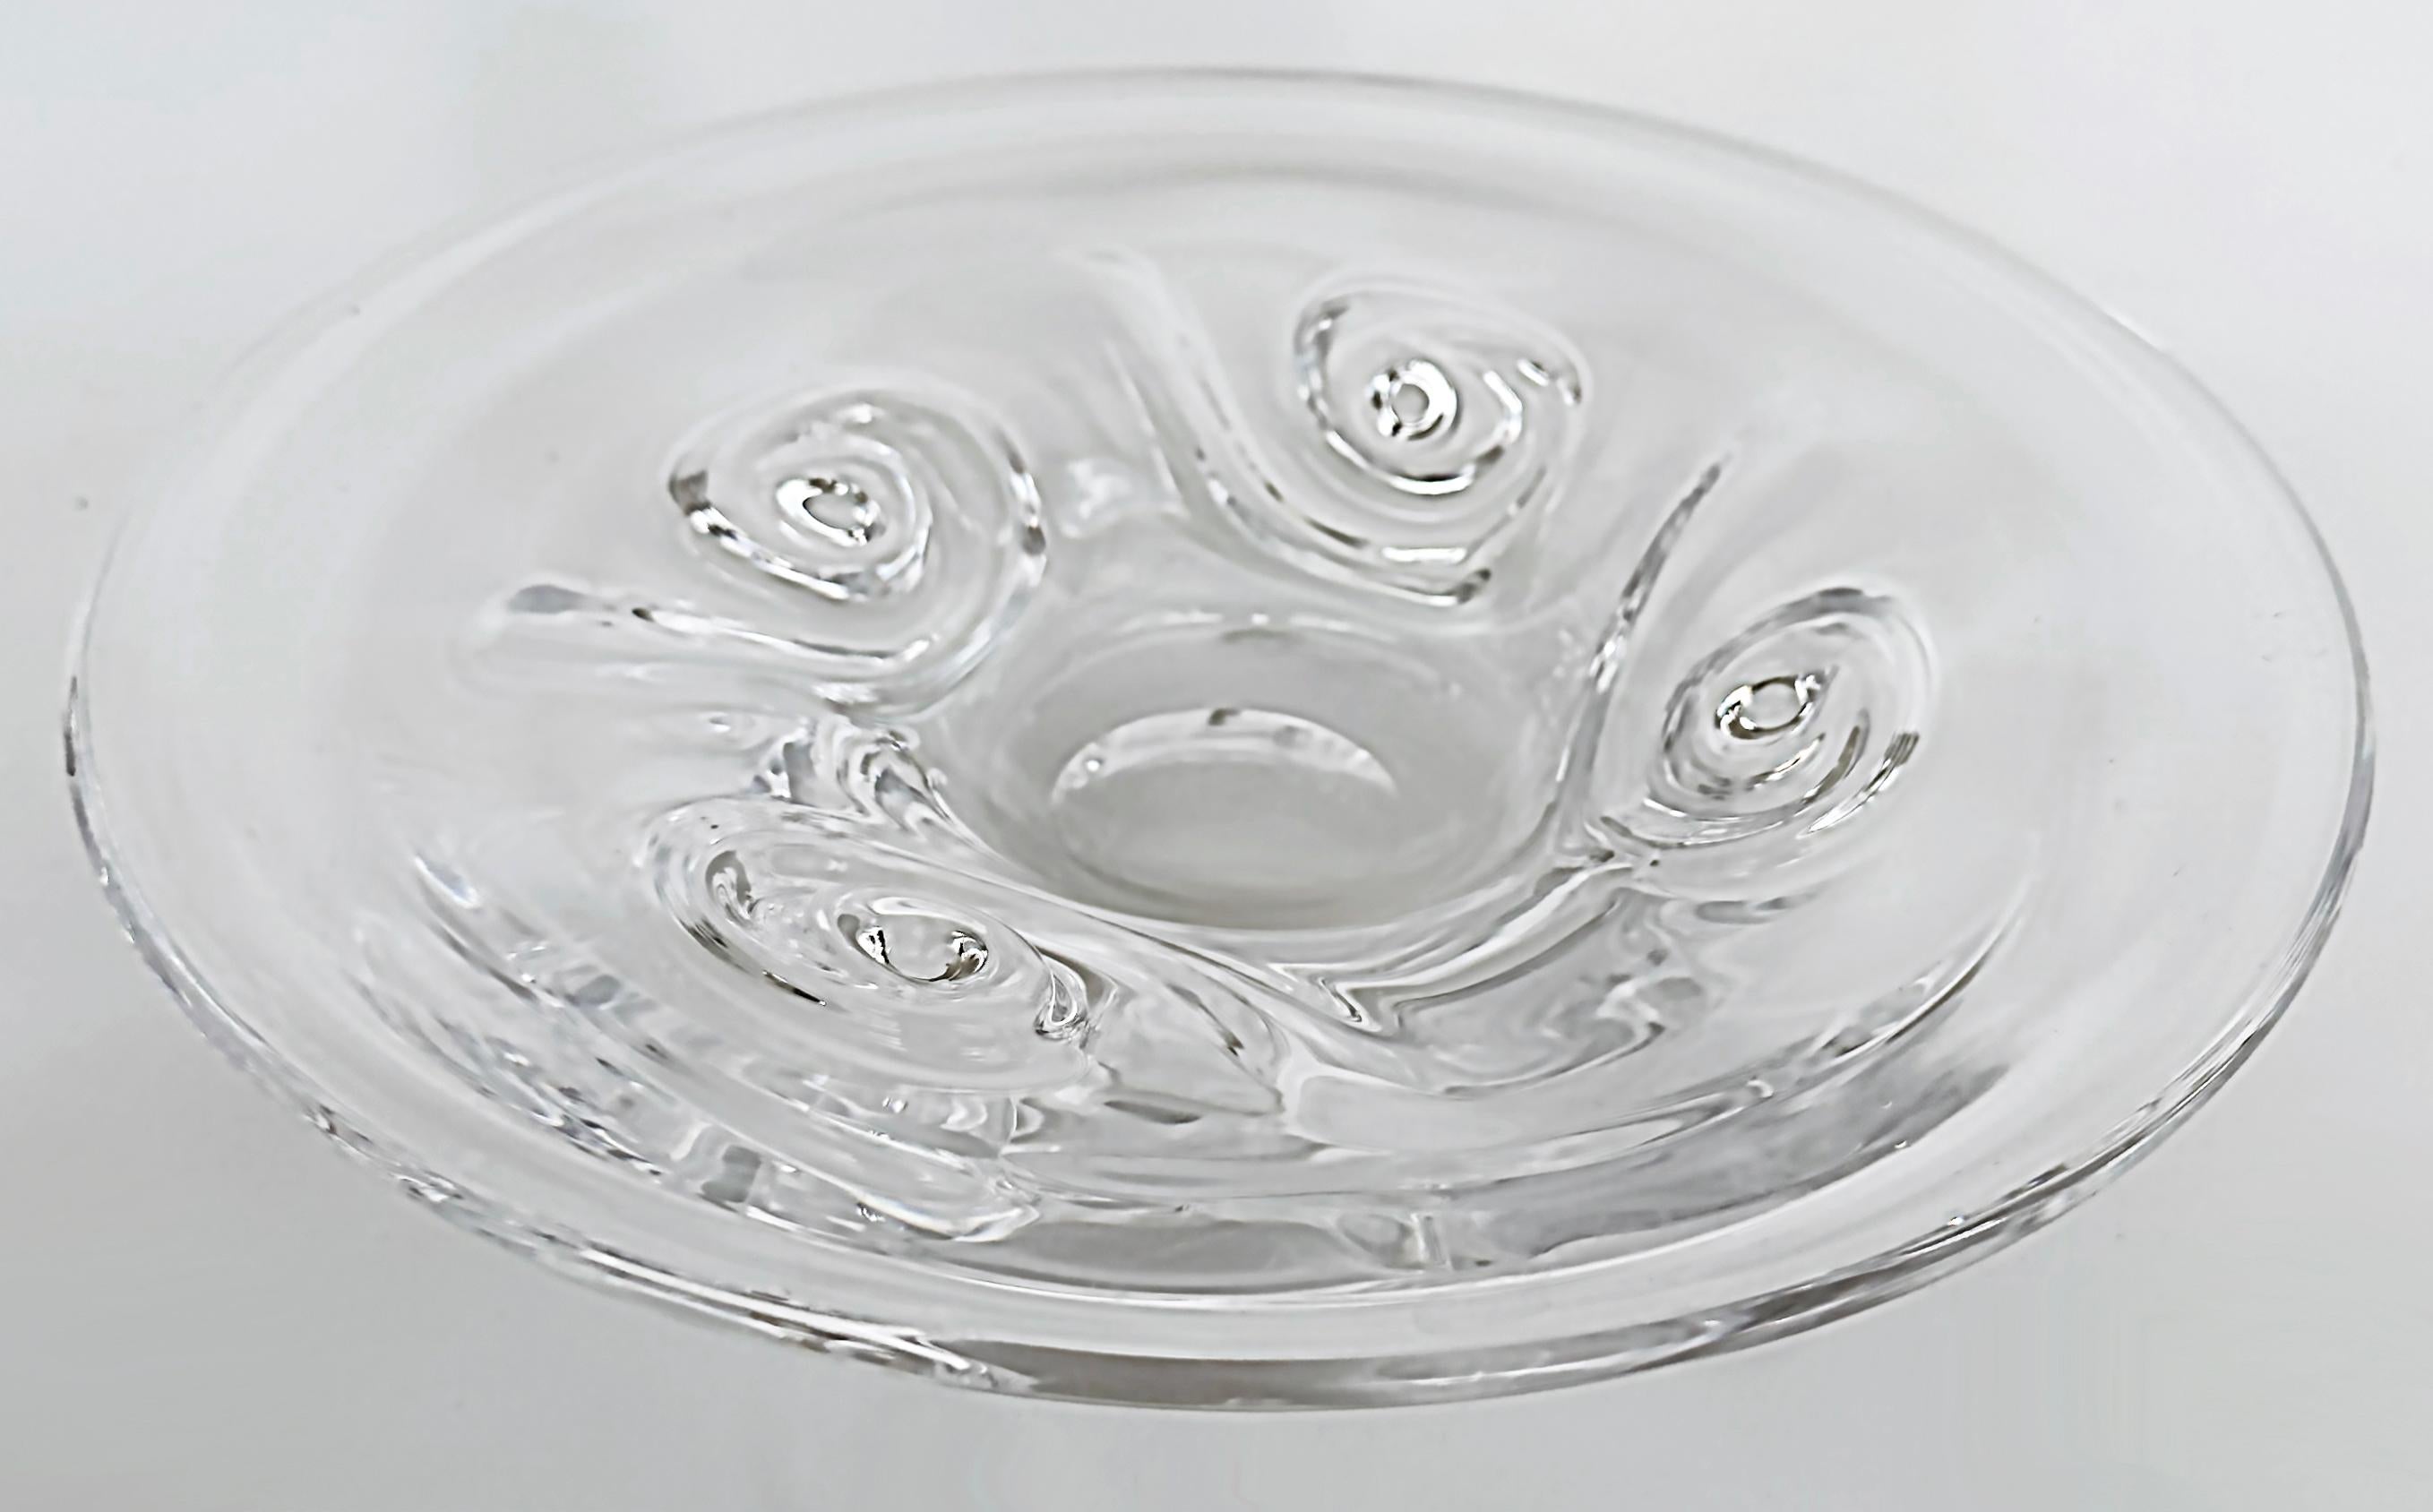 Kosta Boda Sweden Goran Warff Modernist Art Glass Bowl with Swirl Designs For Sale 2